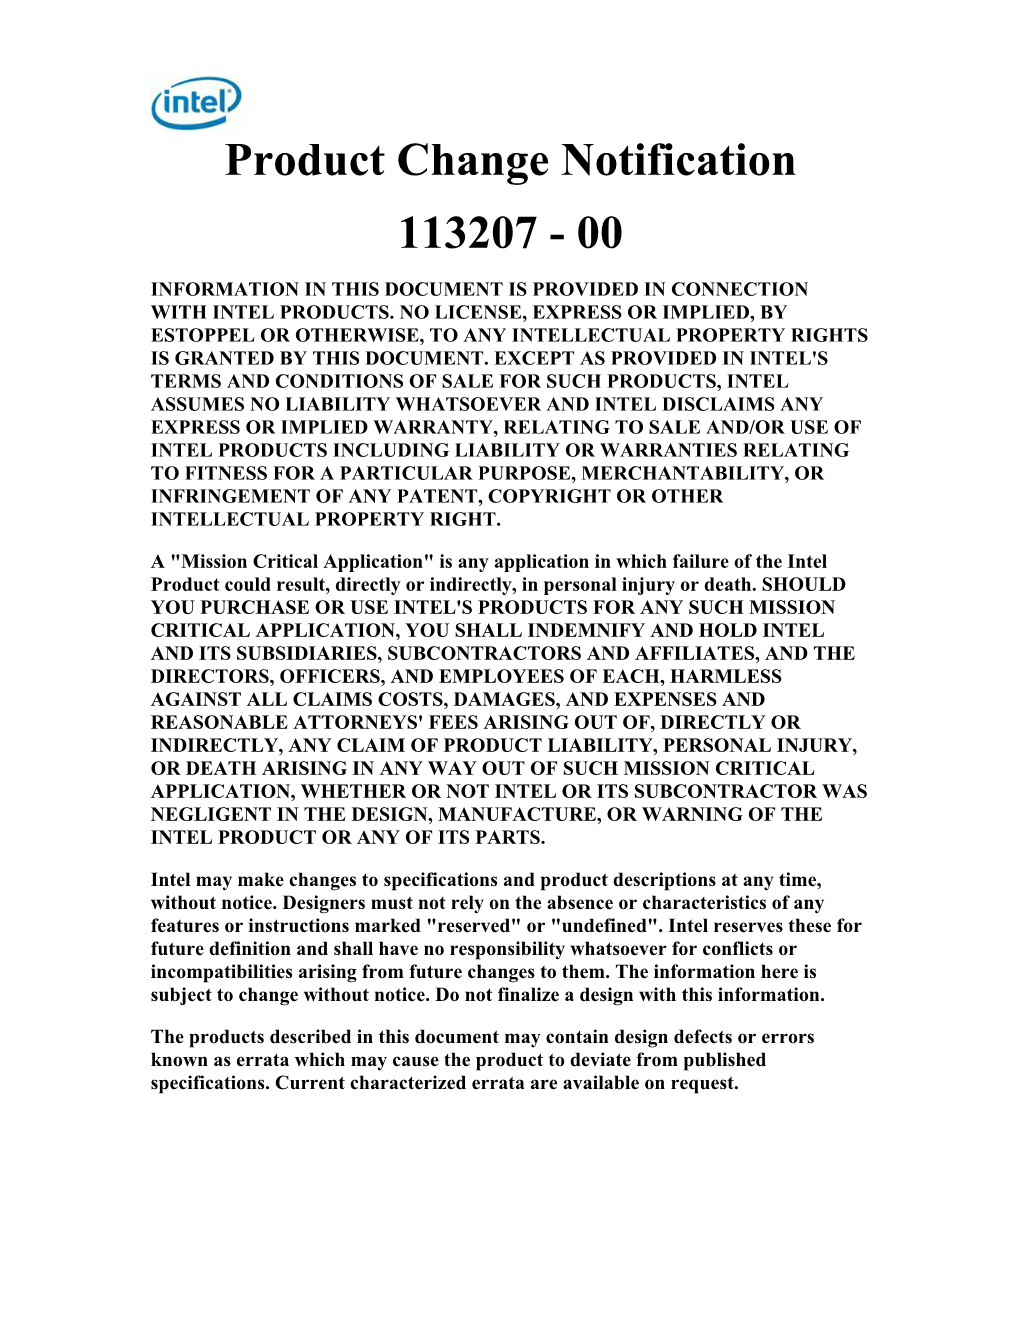 Product Change Notification 113207